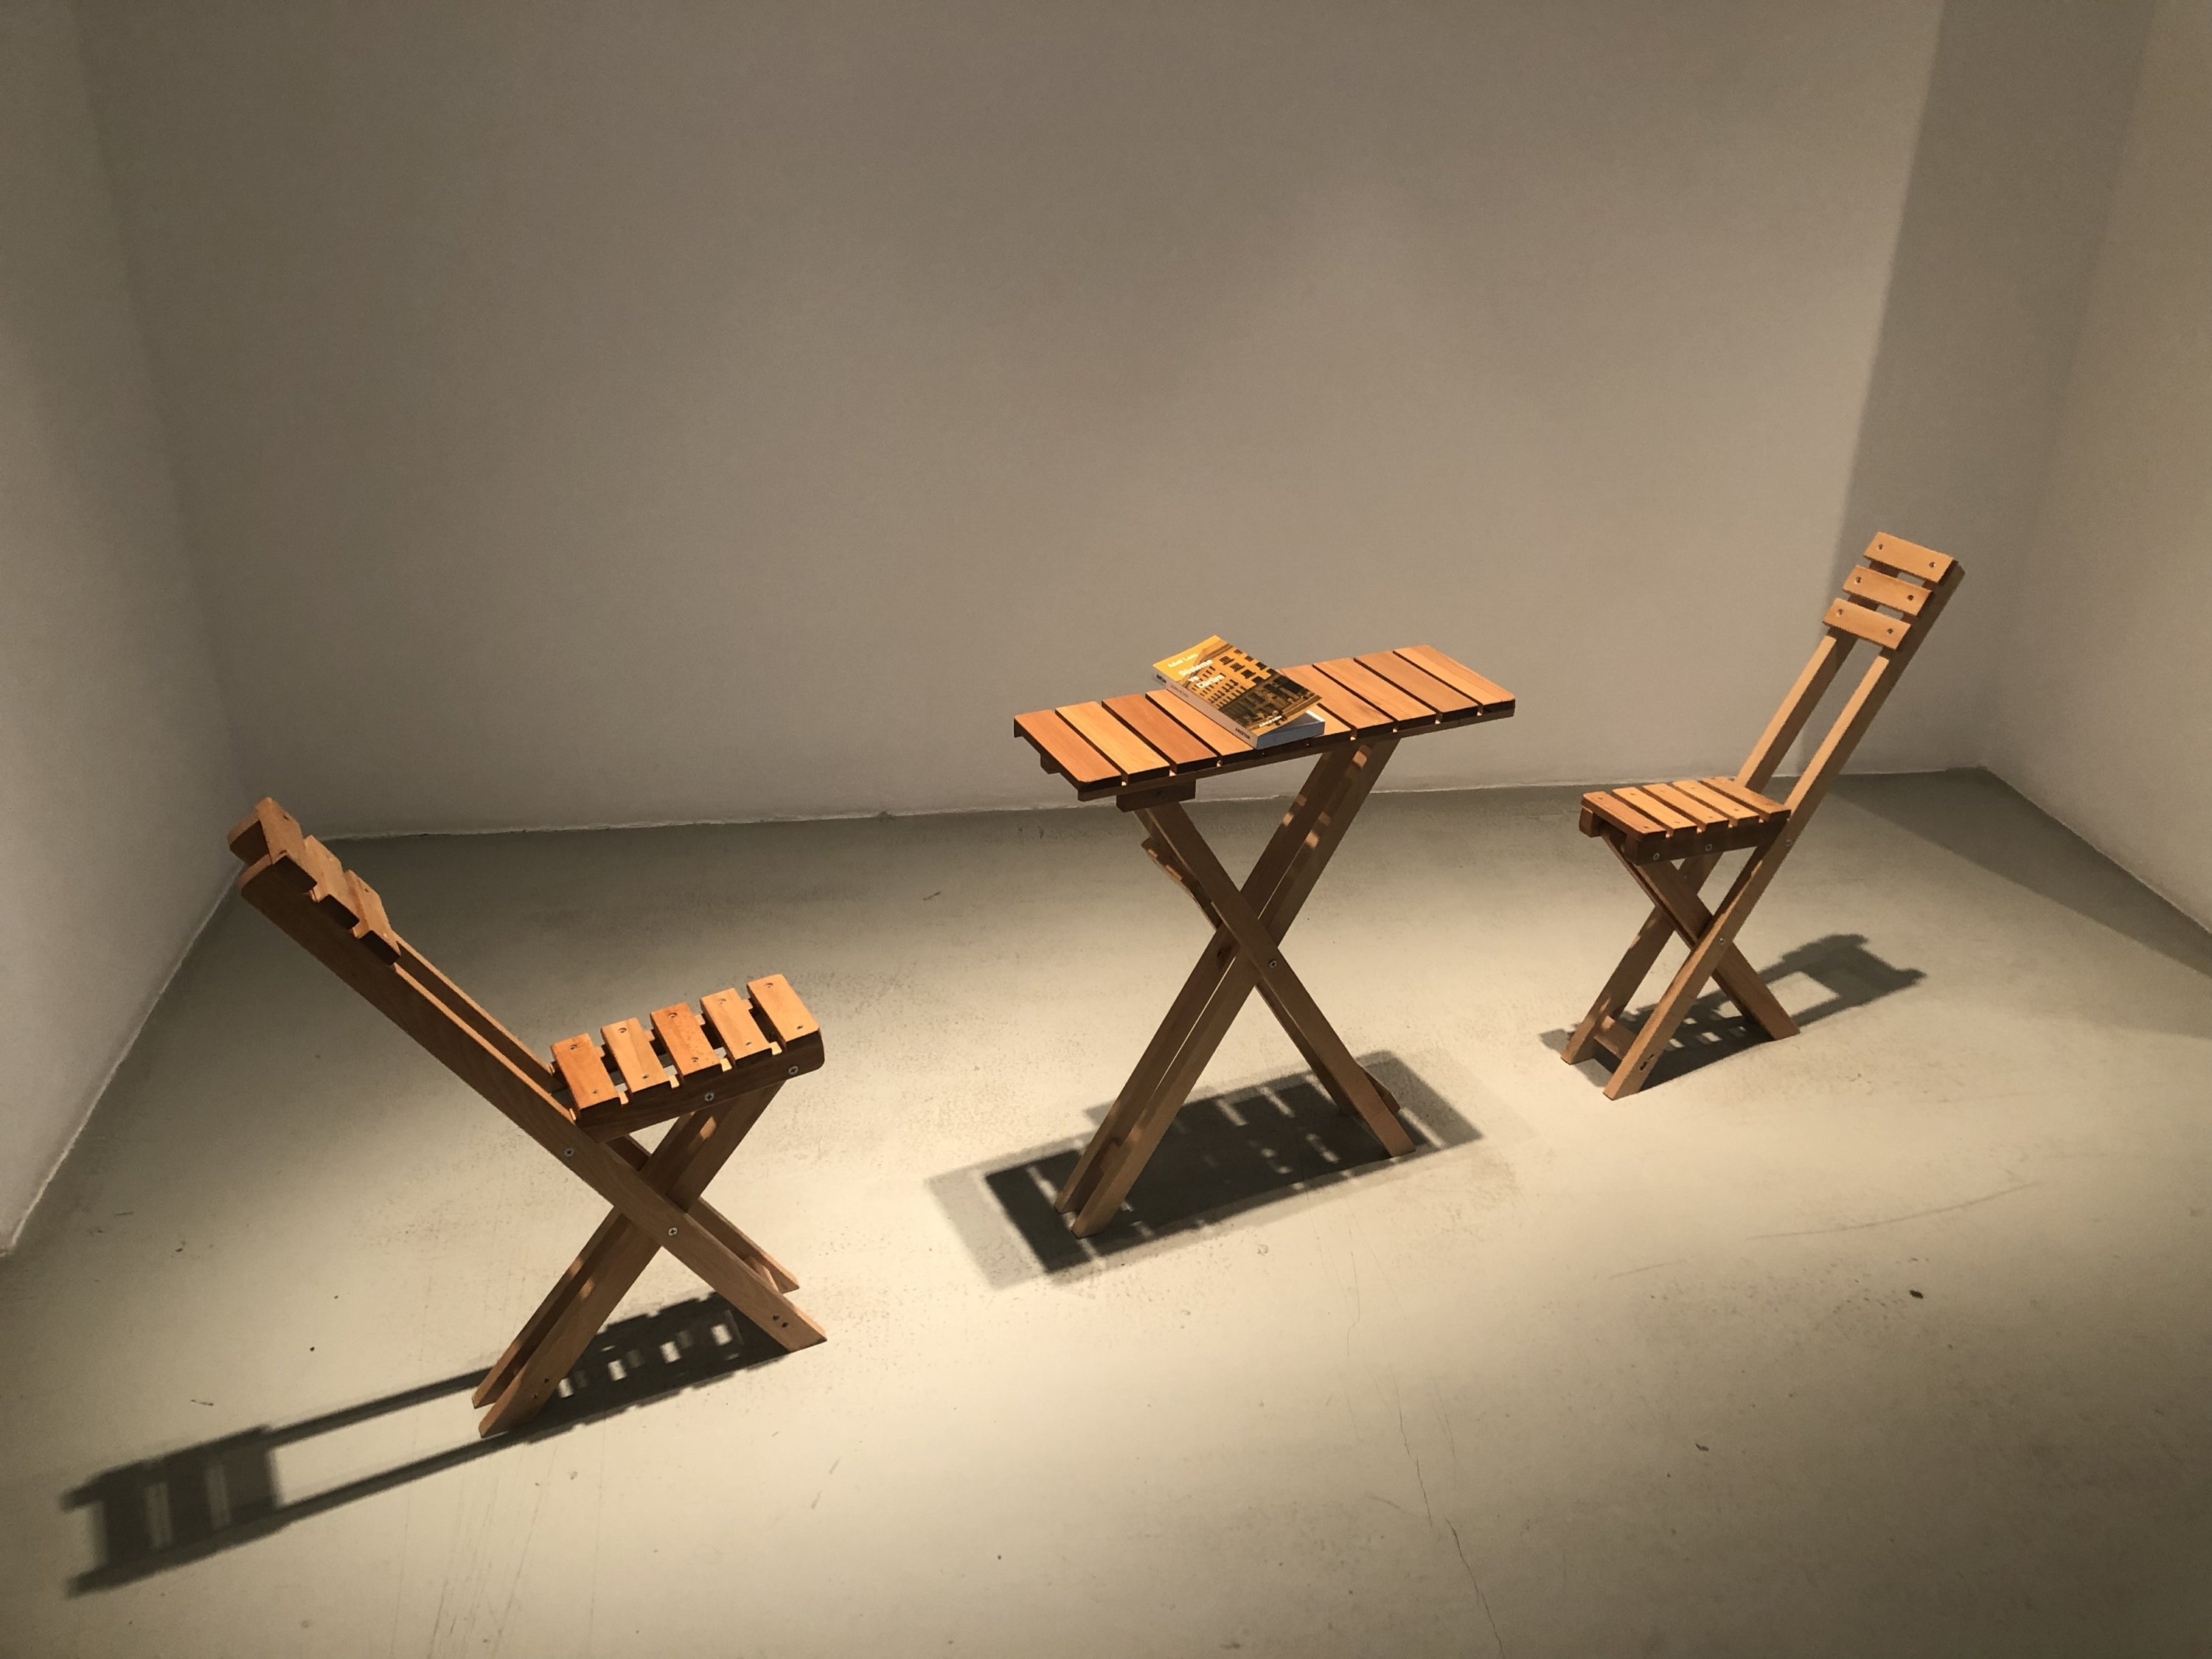 Egemen Tuncer and Hacer Kıroğlu, “Balcony.rar”, installation, wooden folding table and chair, book, 2021. (Photo by Matt Hanson)